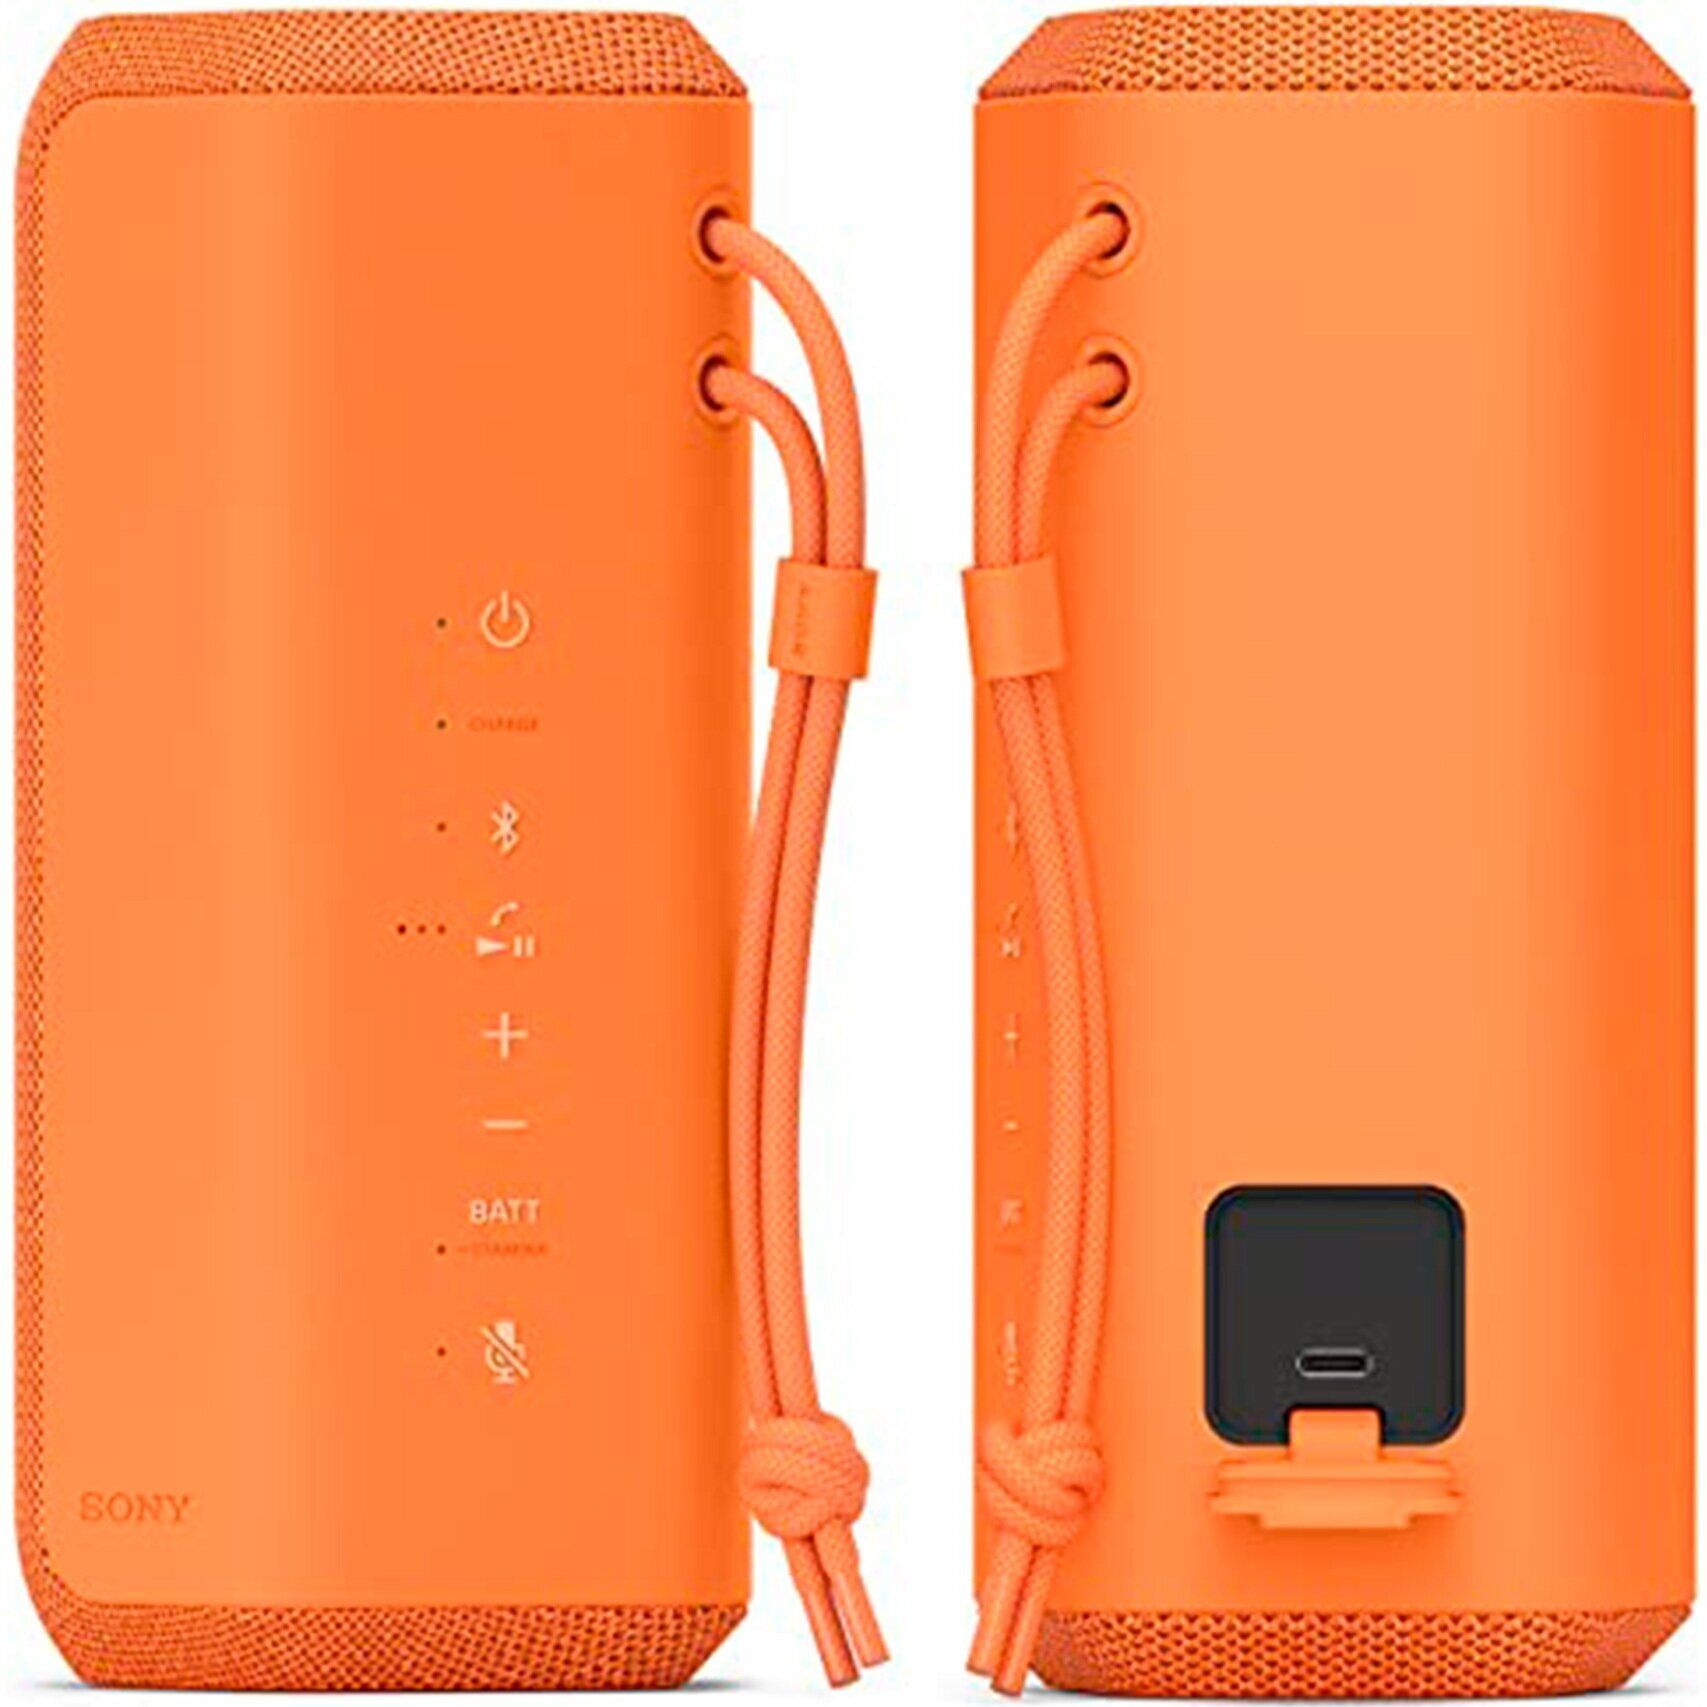 Портативная акустика Sony SRS-XE200 оранжевый портативная акустика sony srs xe200 оранжевый srsxe200d ce7